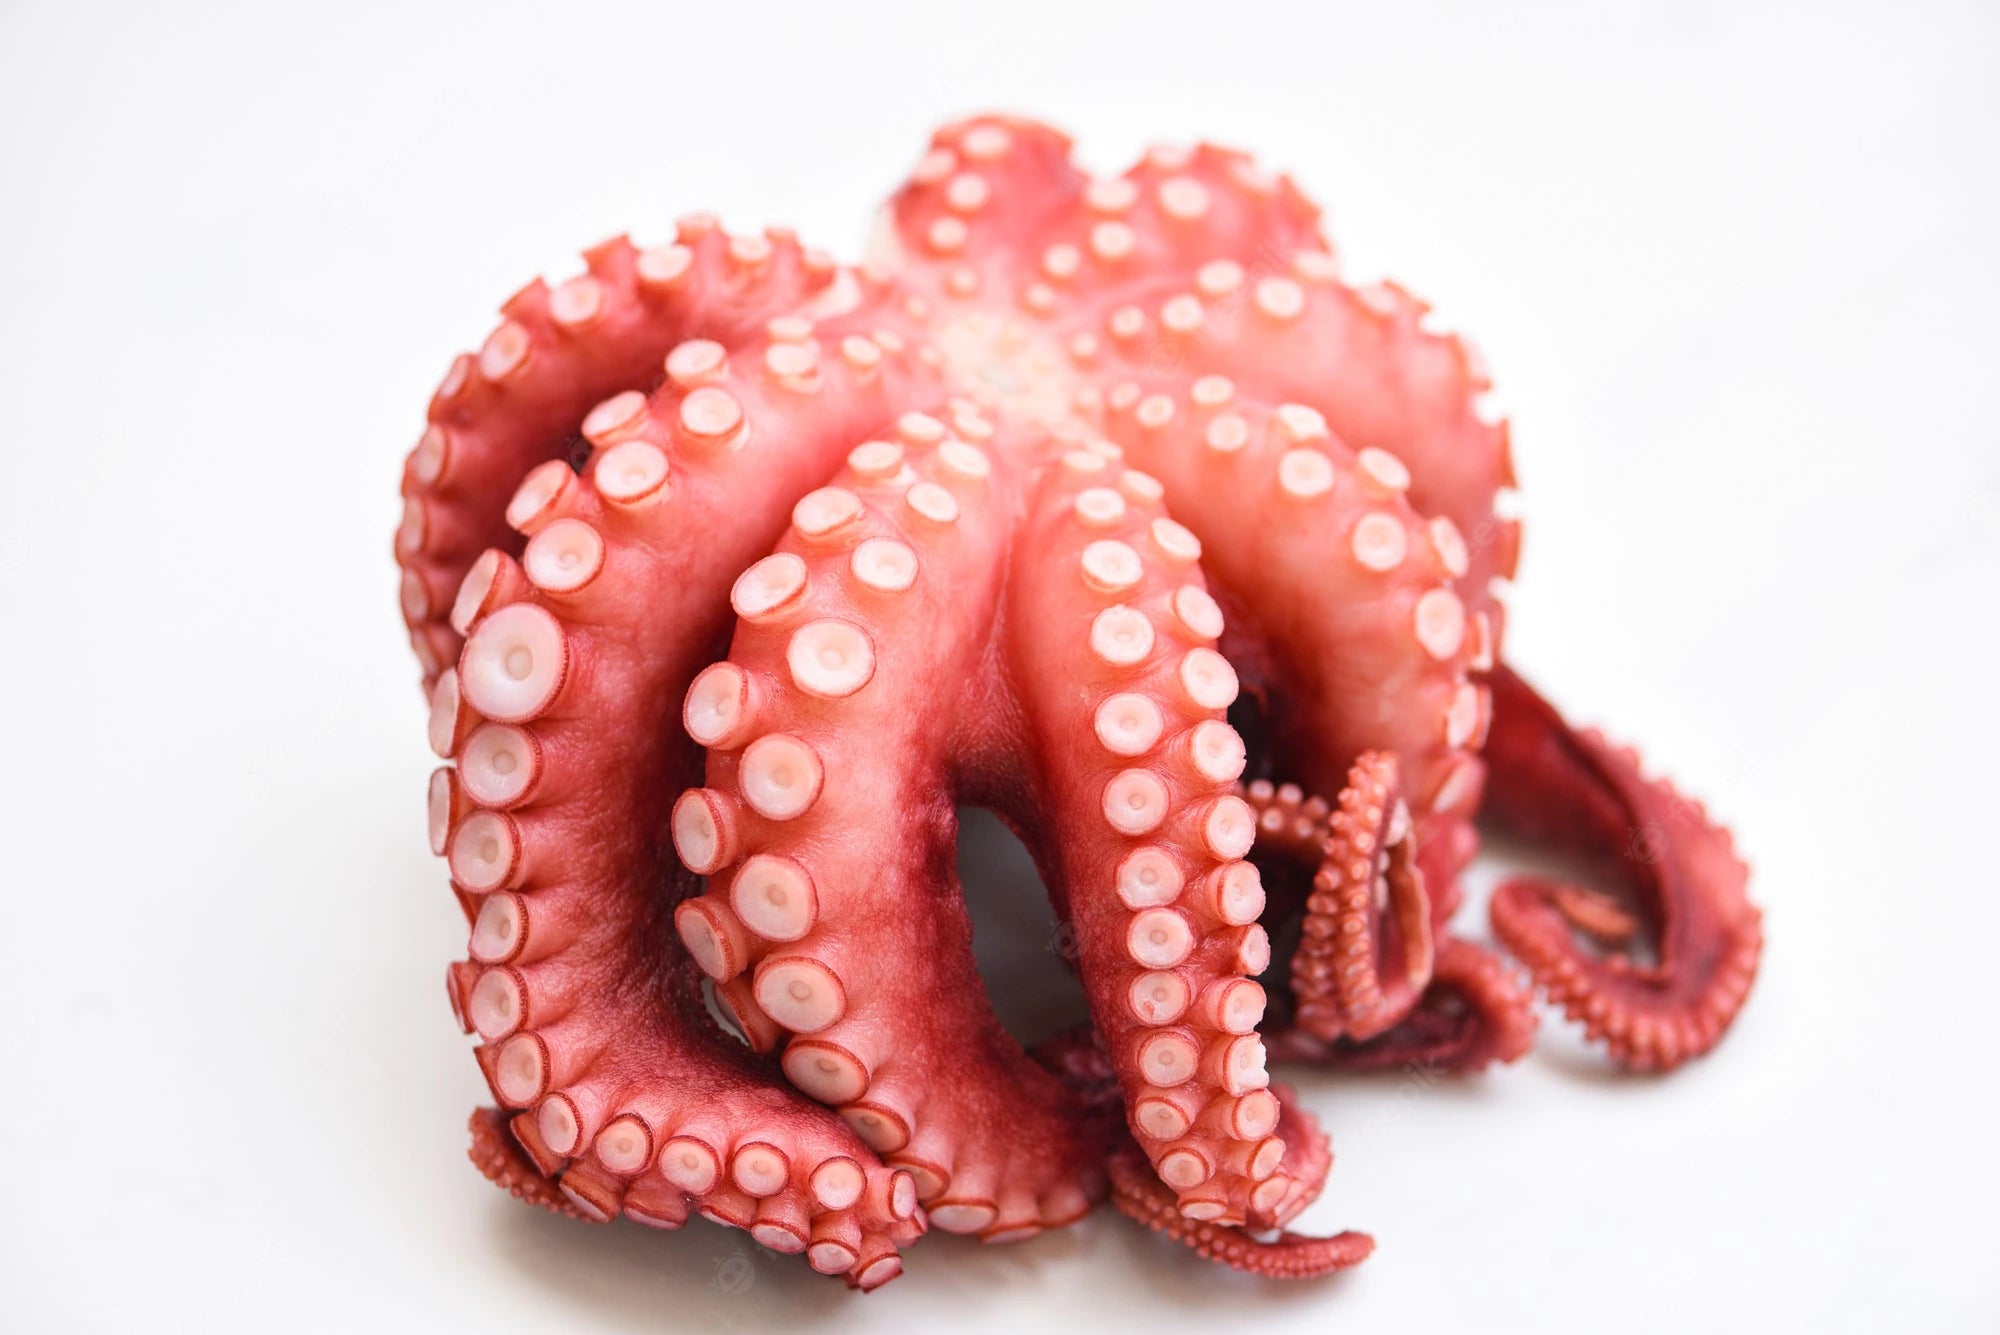 Octopus T3 Frozen Moroccan (4.5-7lb) Price Per LB